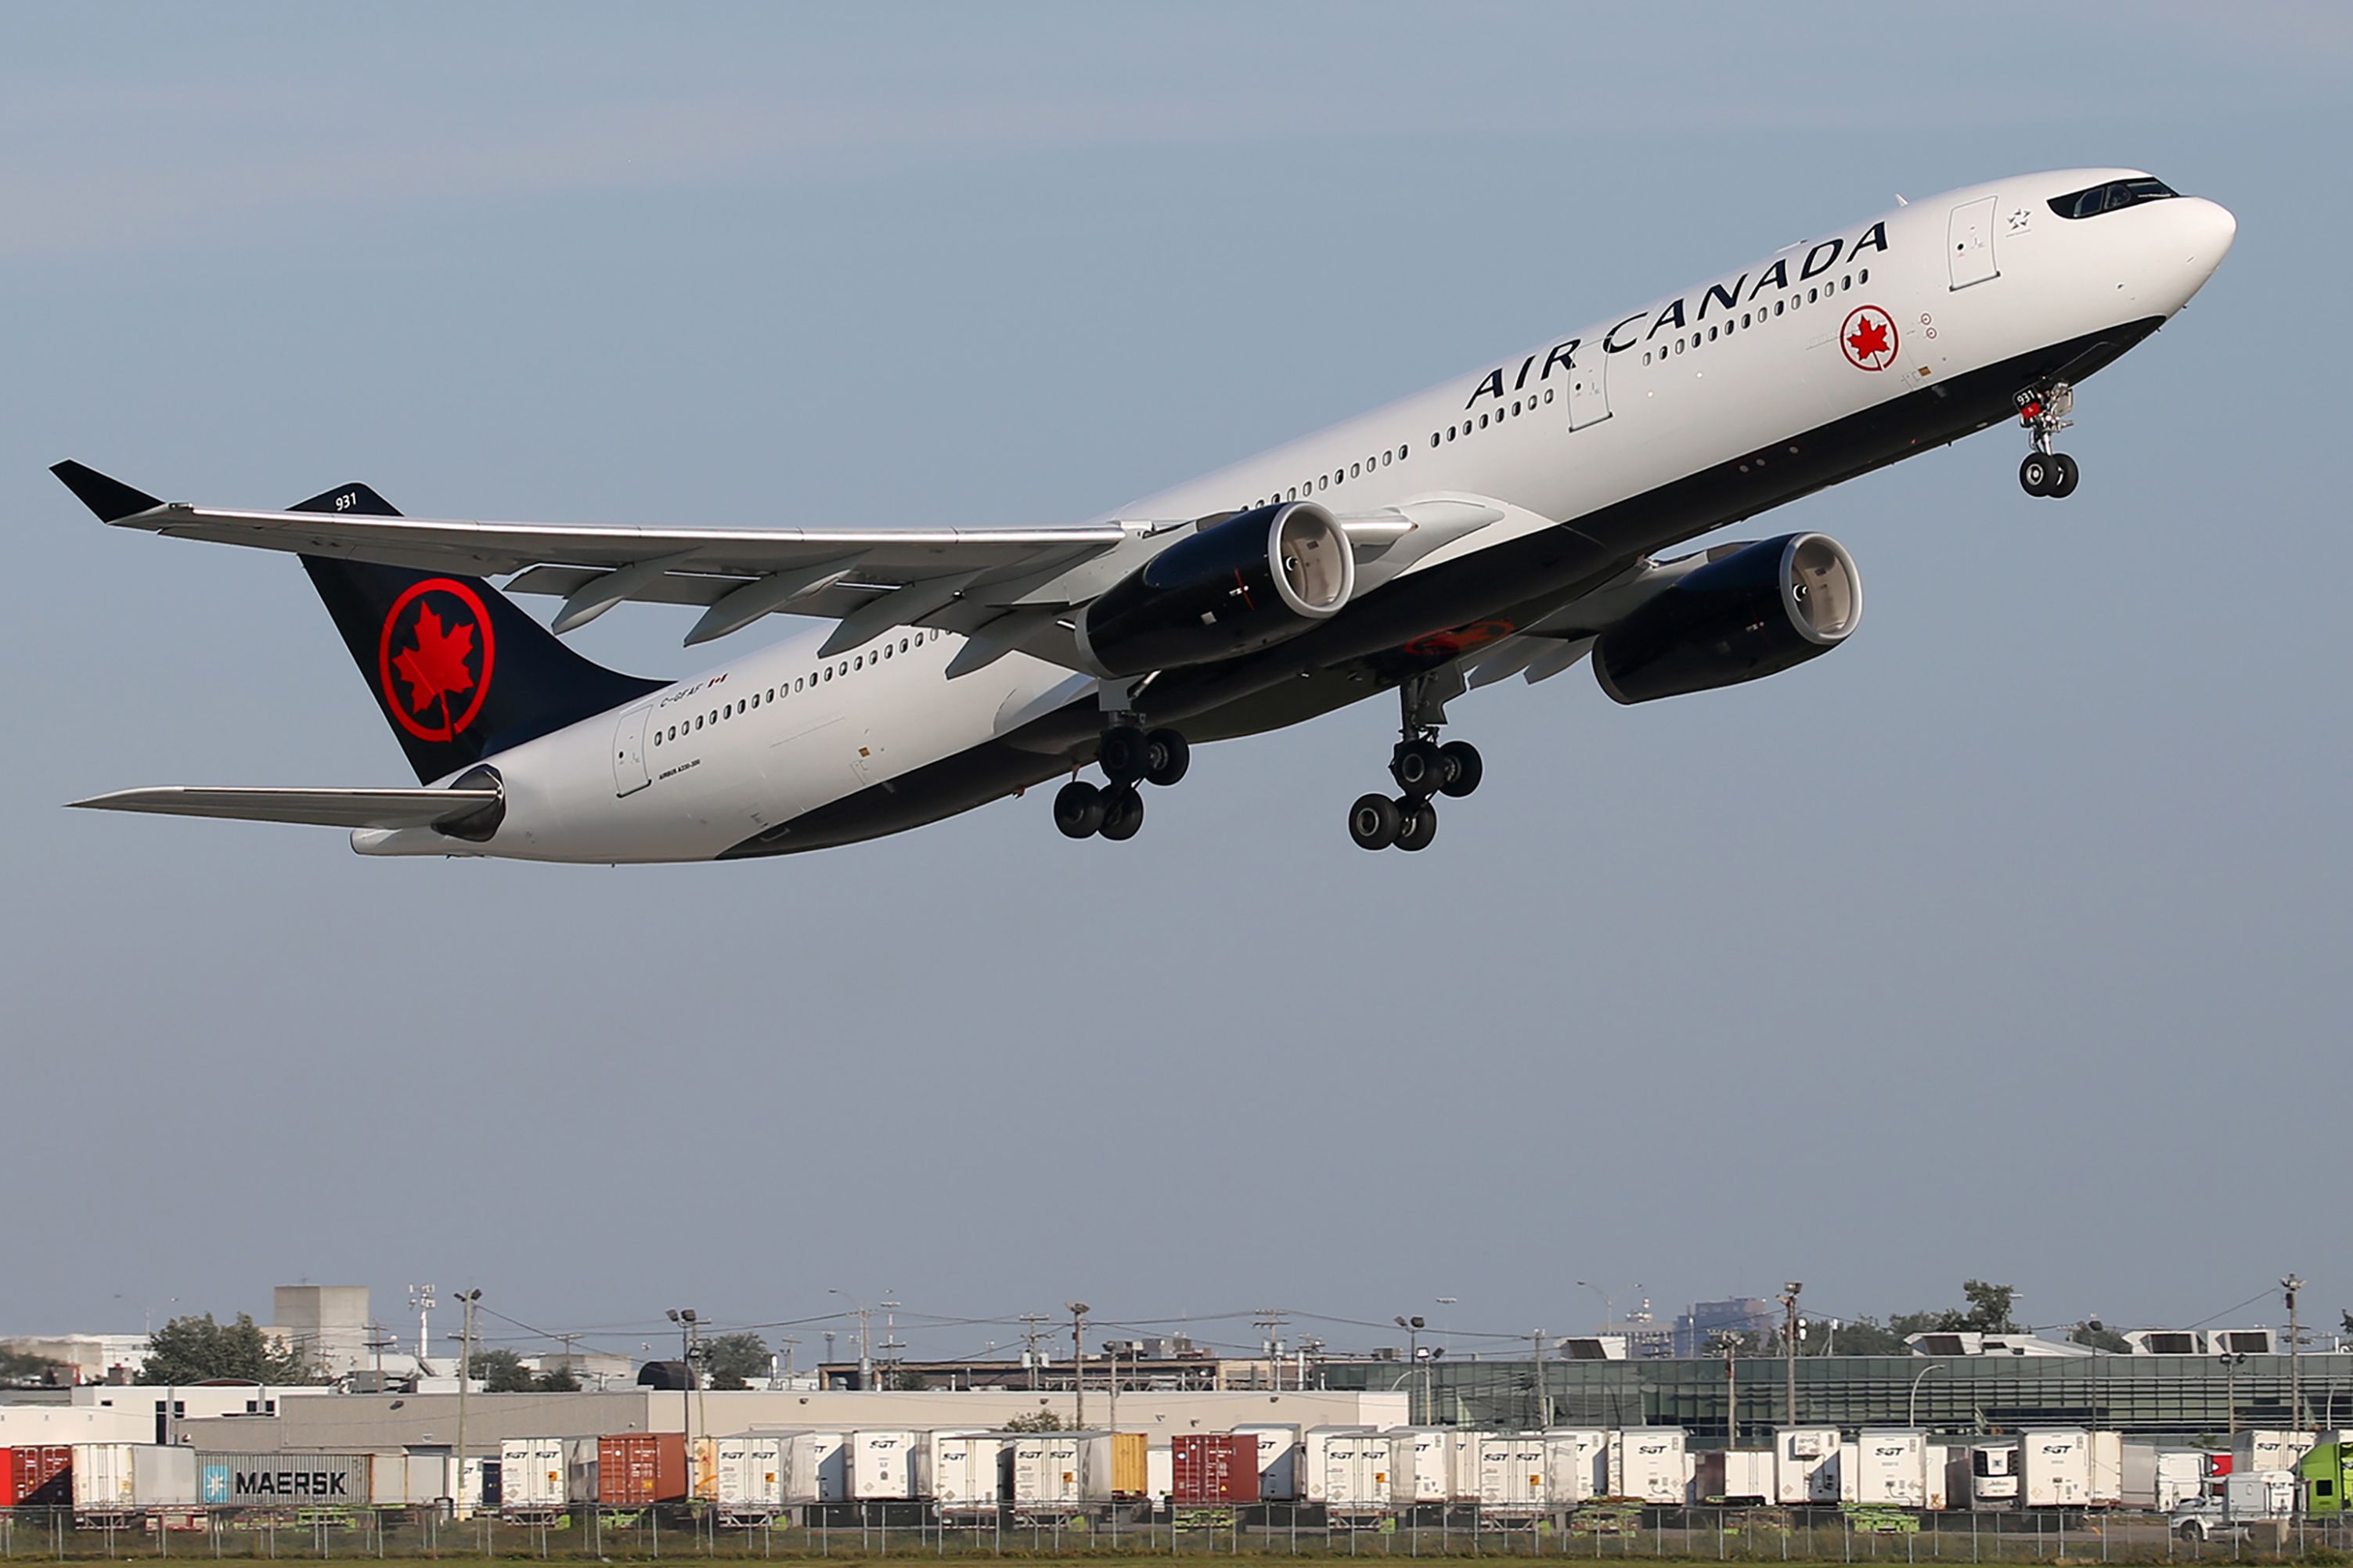 Air Canada A330-300 taking off